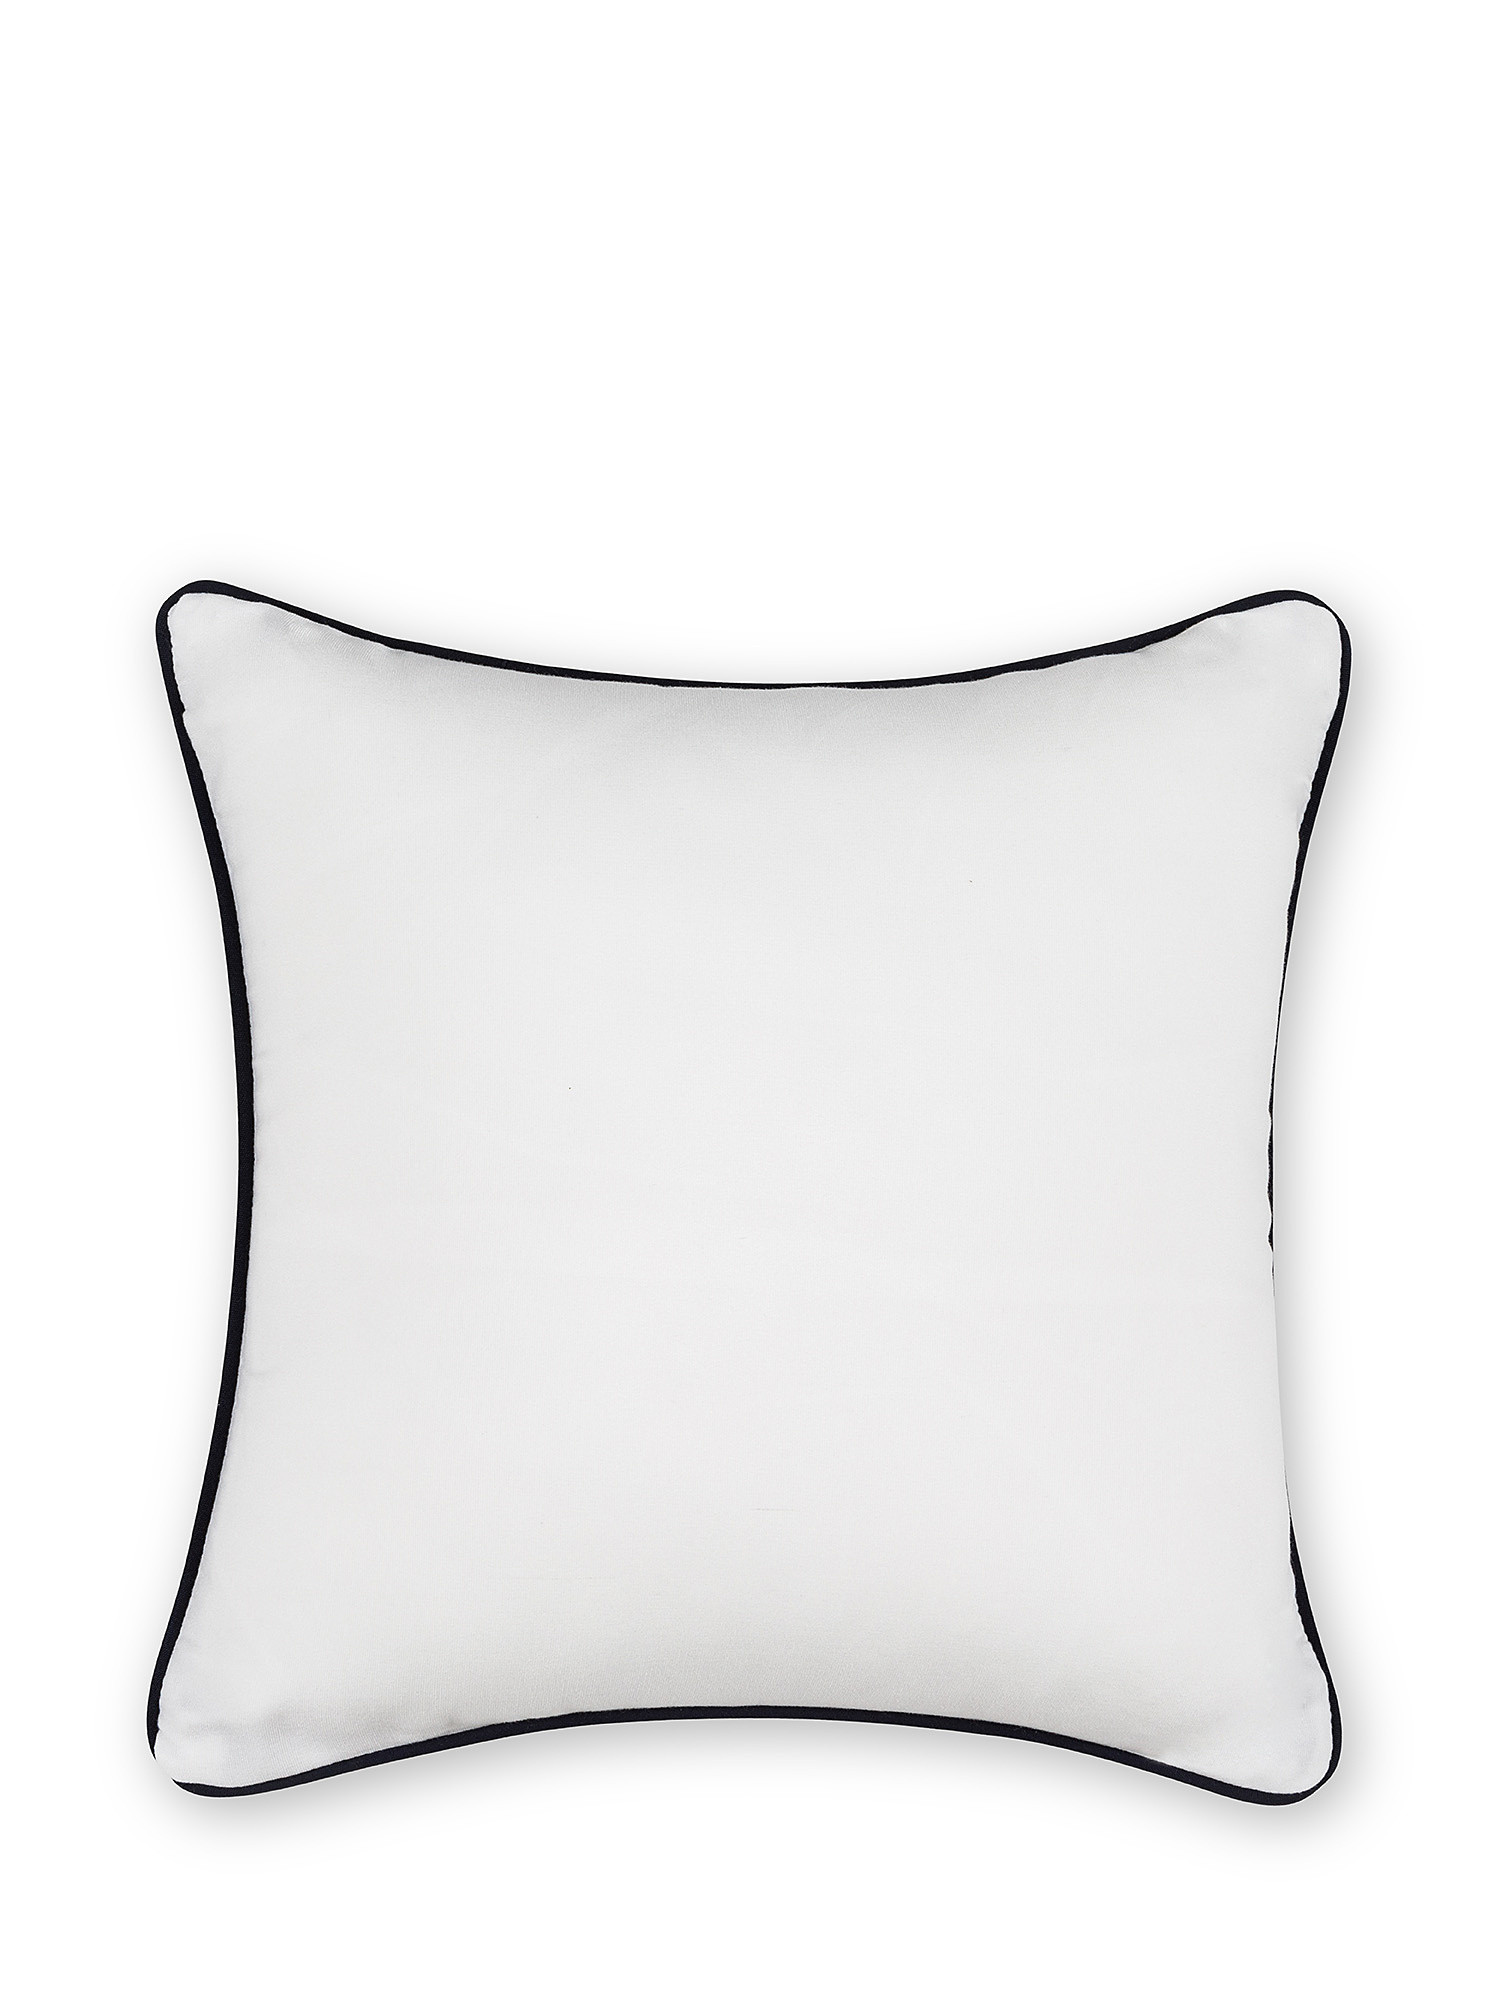 Cuscino da esterno in teflon 45x45cm, Bianco, large image number 0